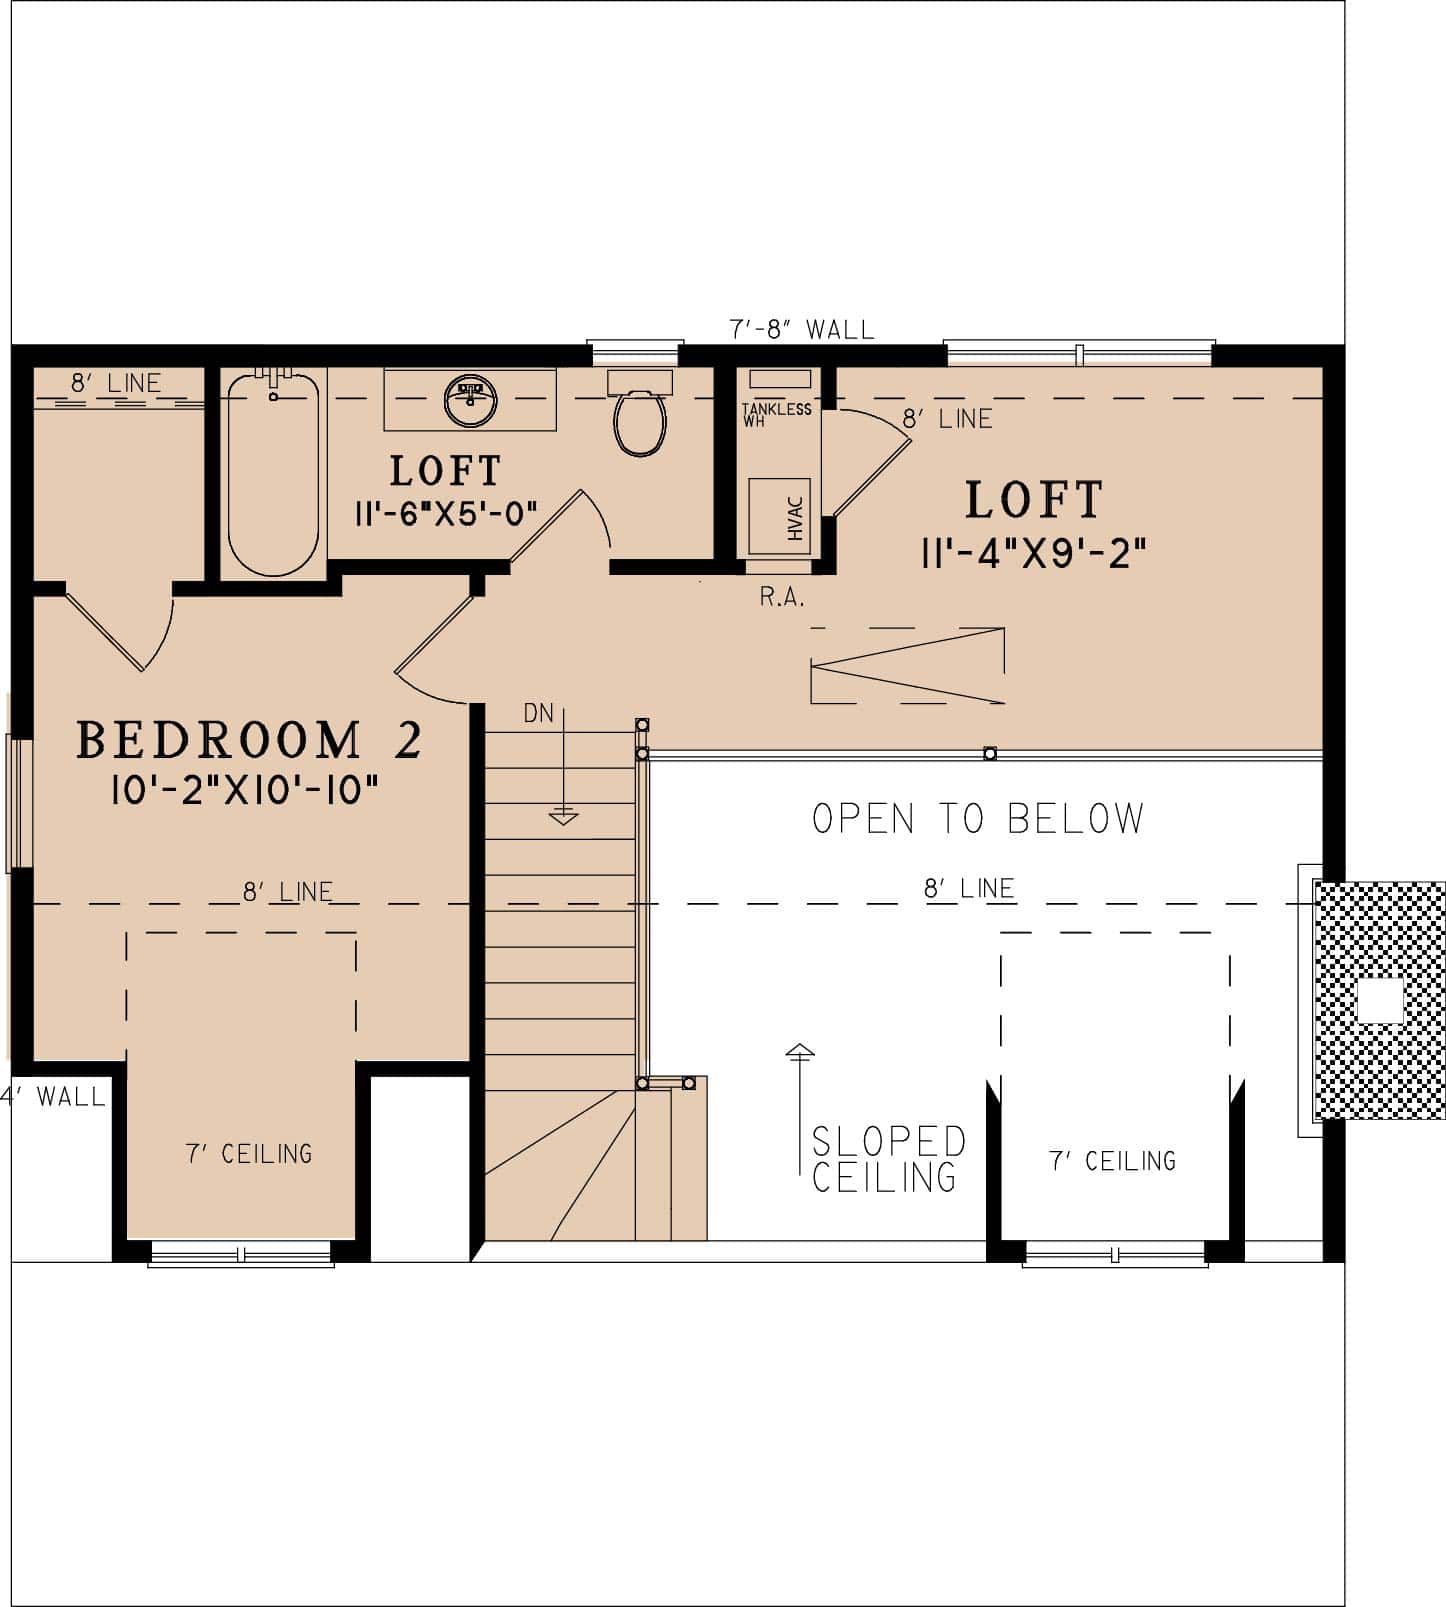 Rustic Floor Plan - 2 Bedrms, 2 Baths - 1039 Sq Ft - #193-1310